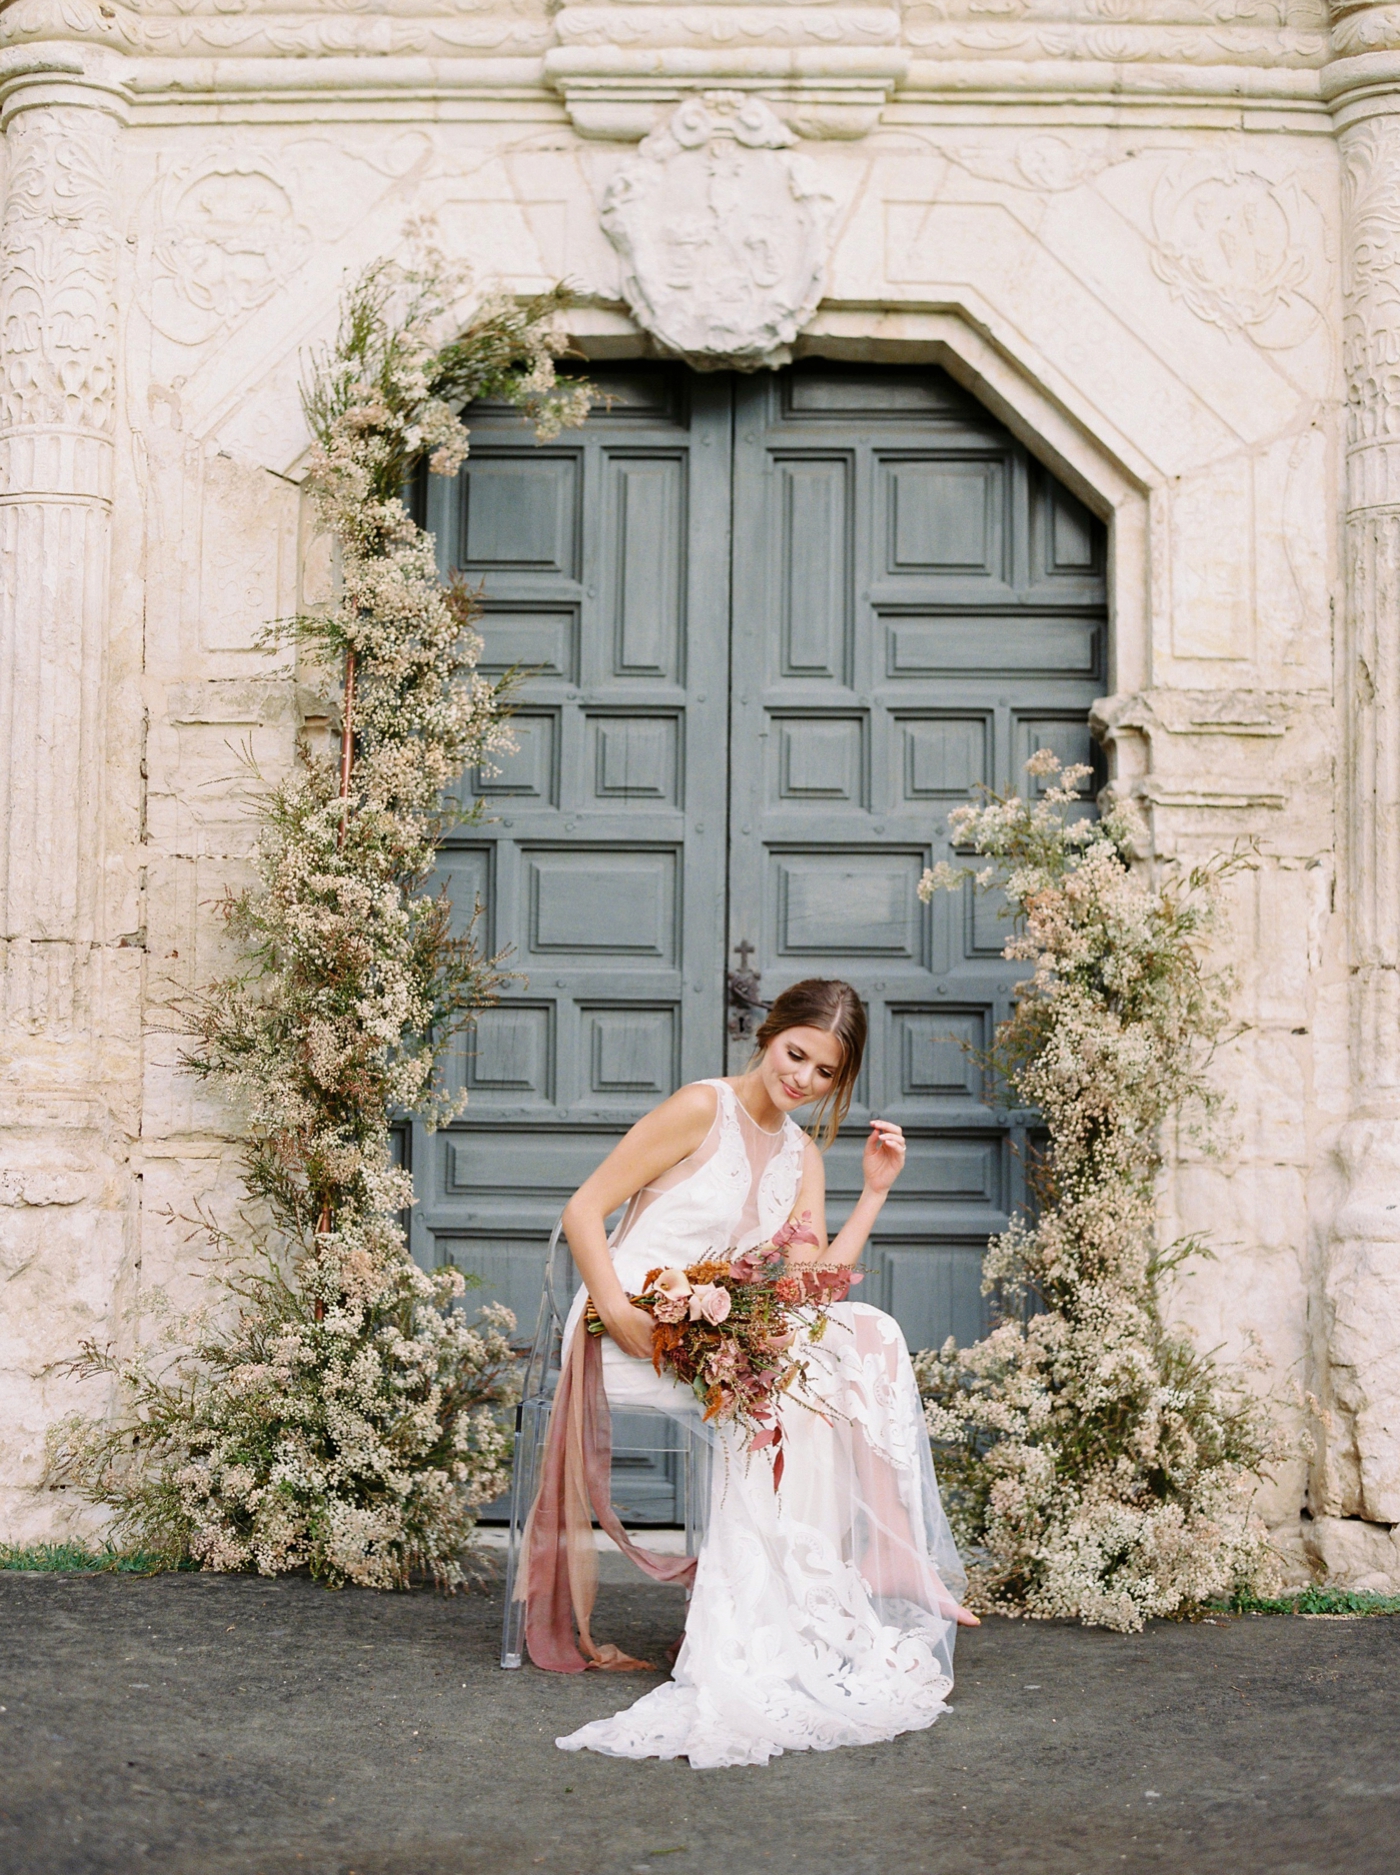 Justine milton photography | san antonio wedding photographers | fine art film photographer | destination wedding |flower arch outdoor ceremony